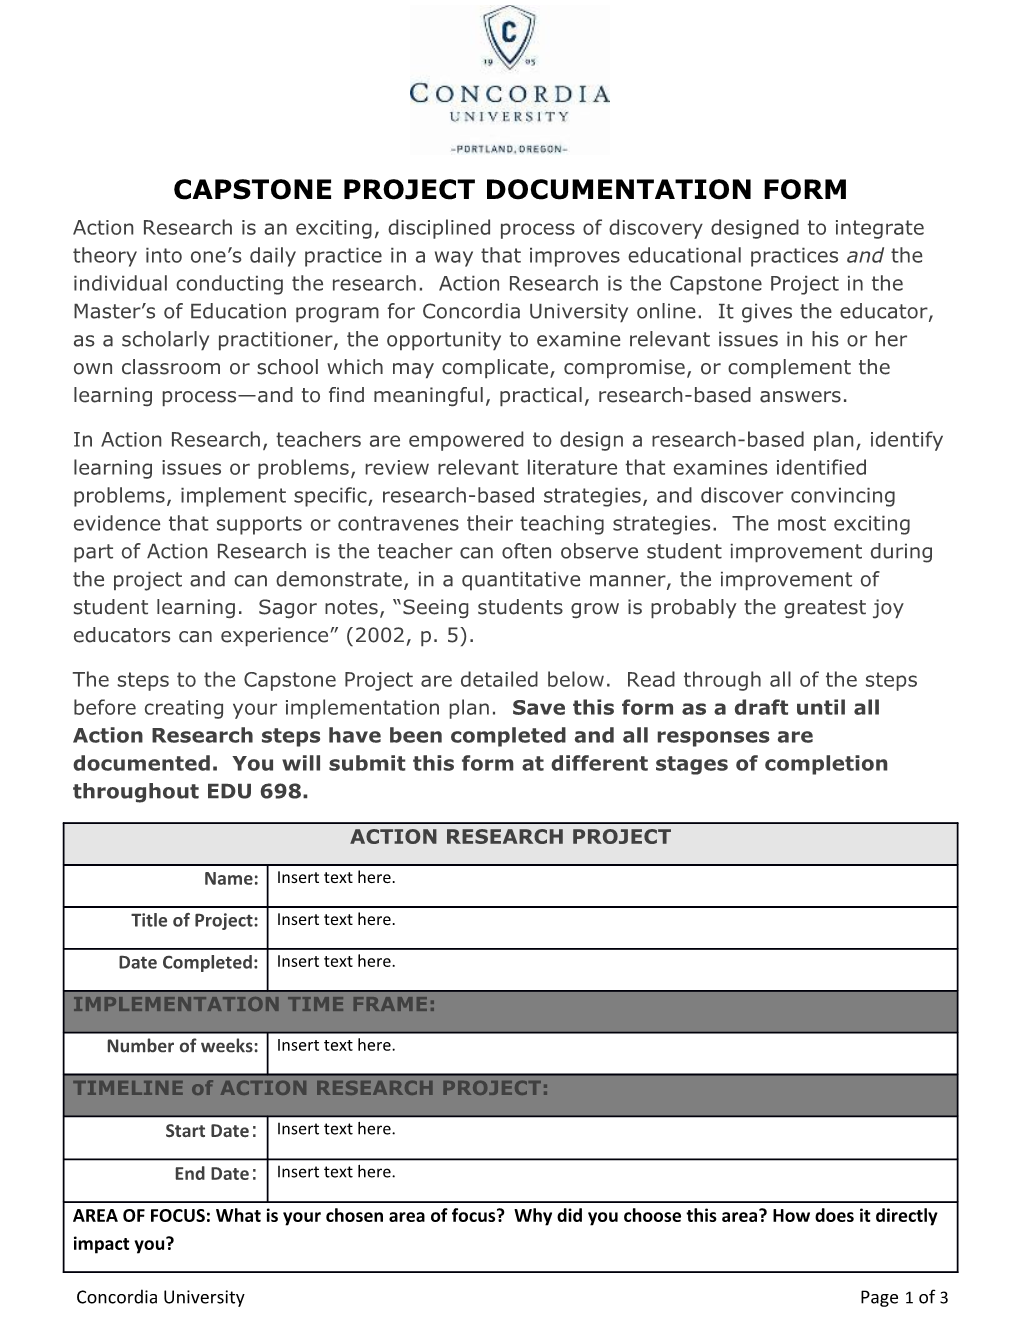 Capstone Project Documentation Form